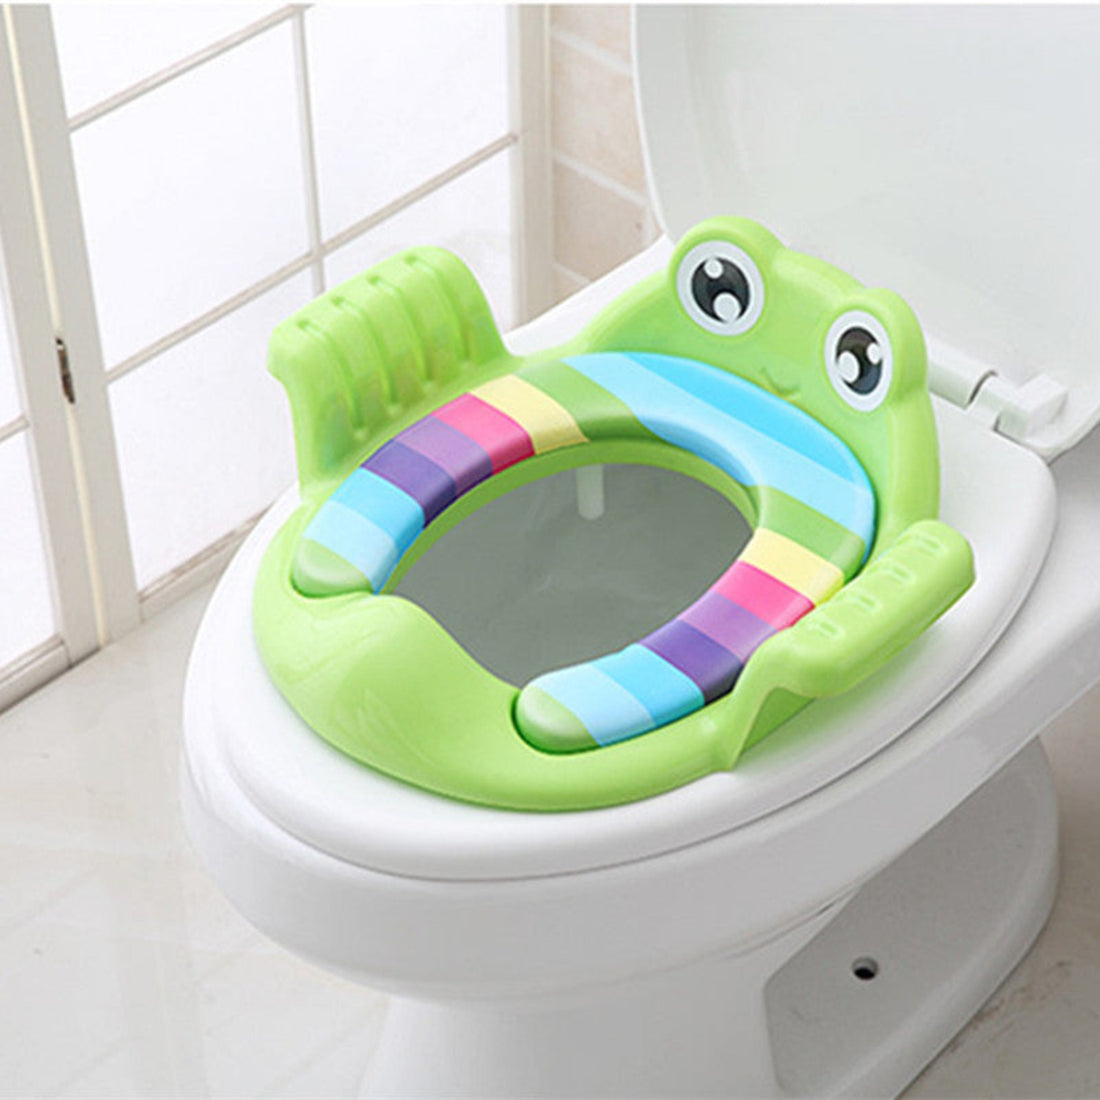 Ergonomic baby toilet seat for potty training